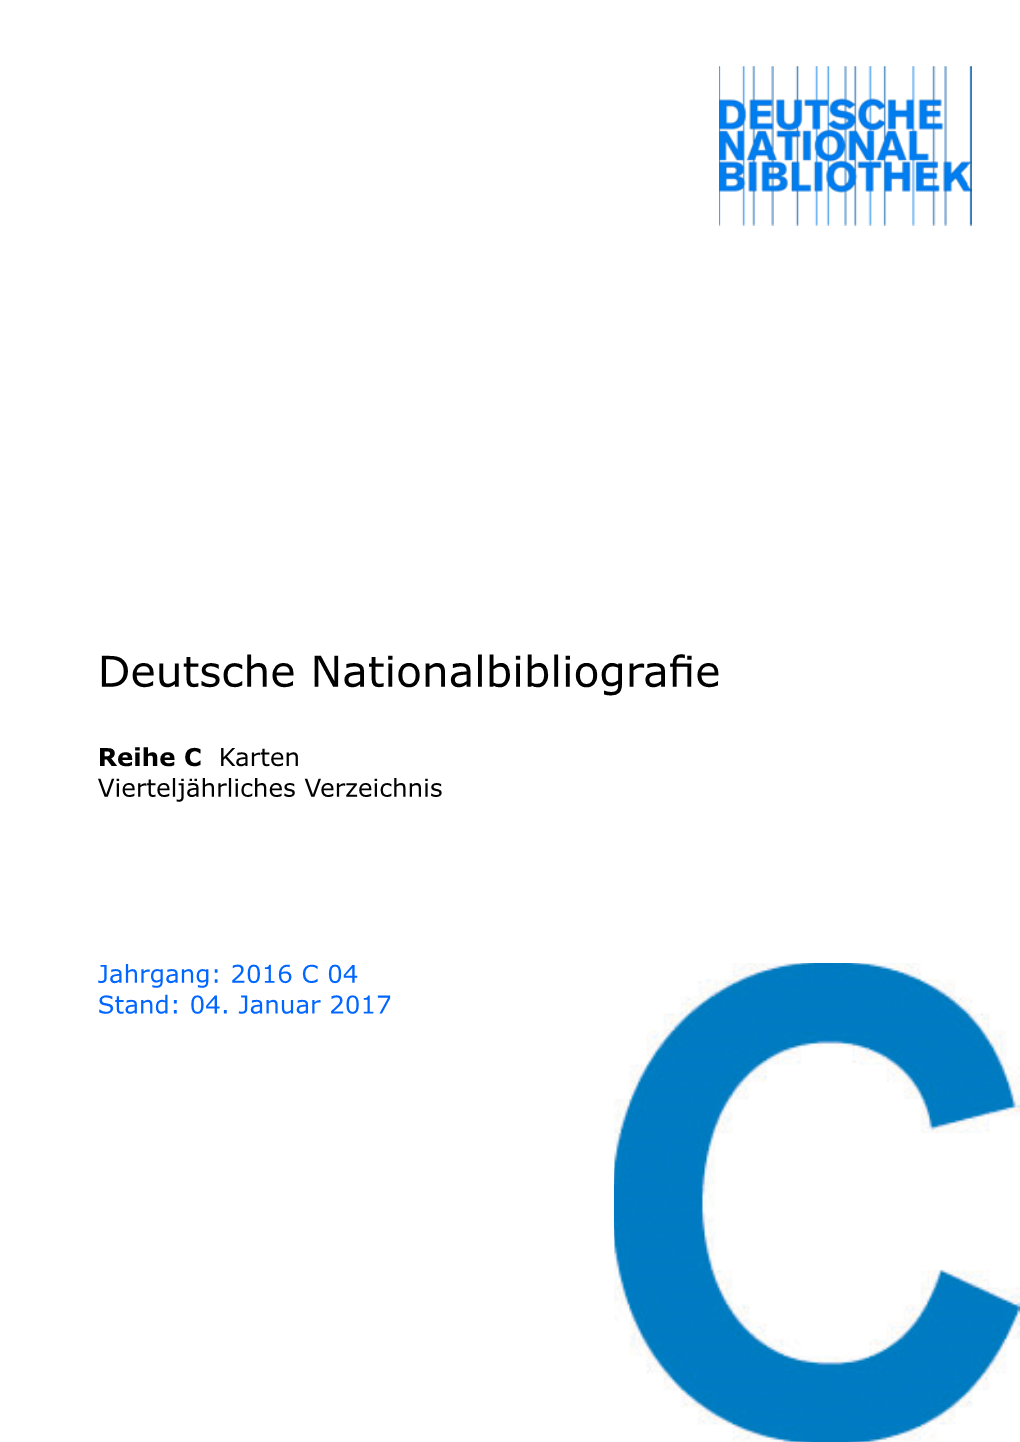 Deutsche Nationalbibliografie 2016 C 04